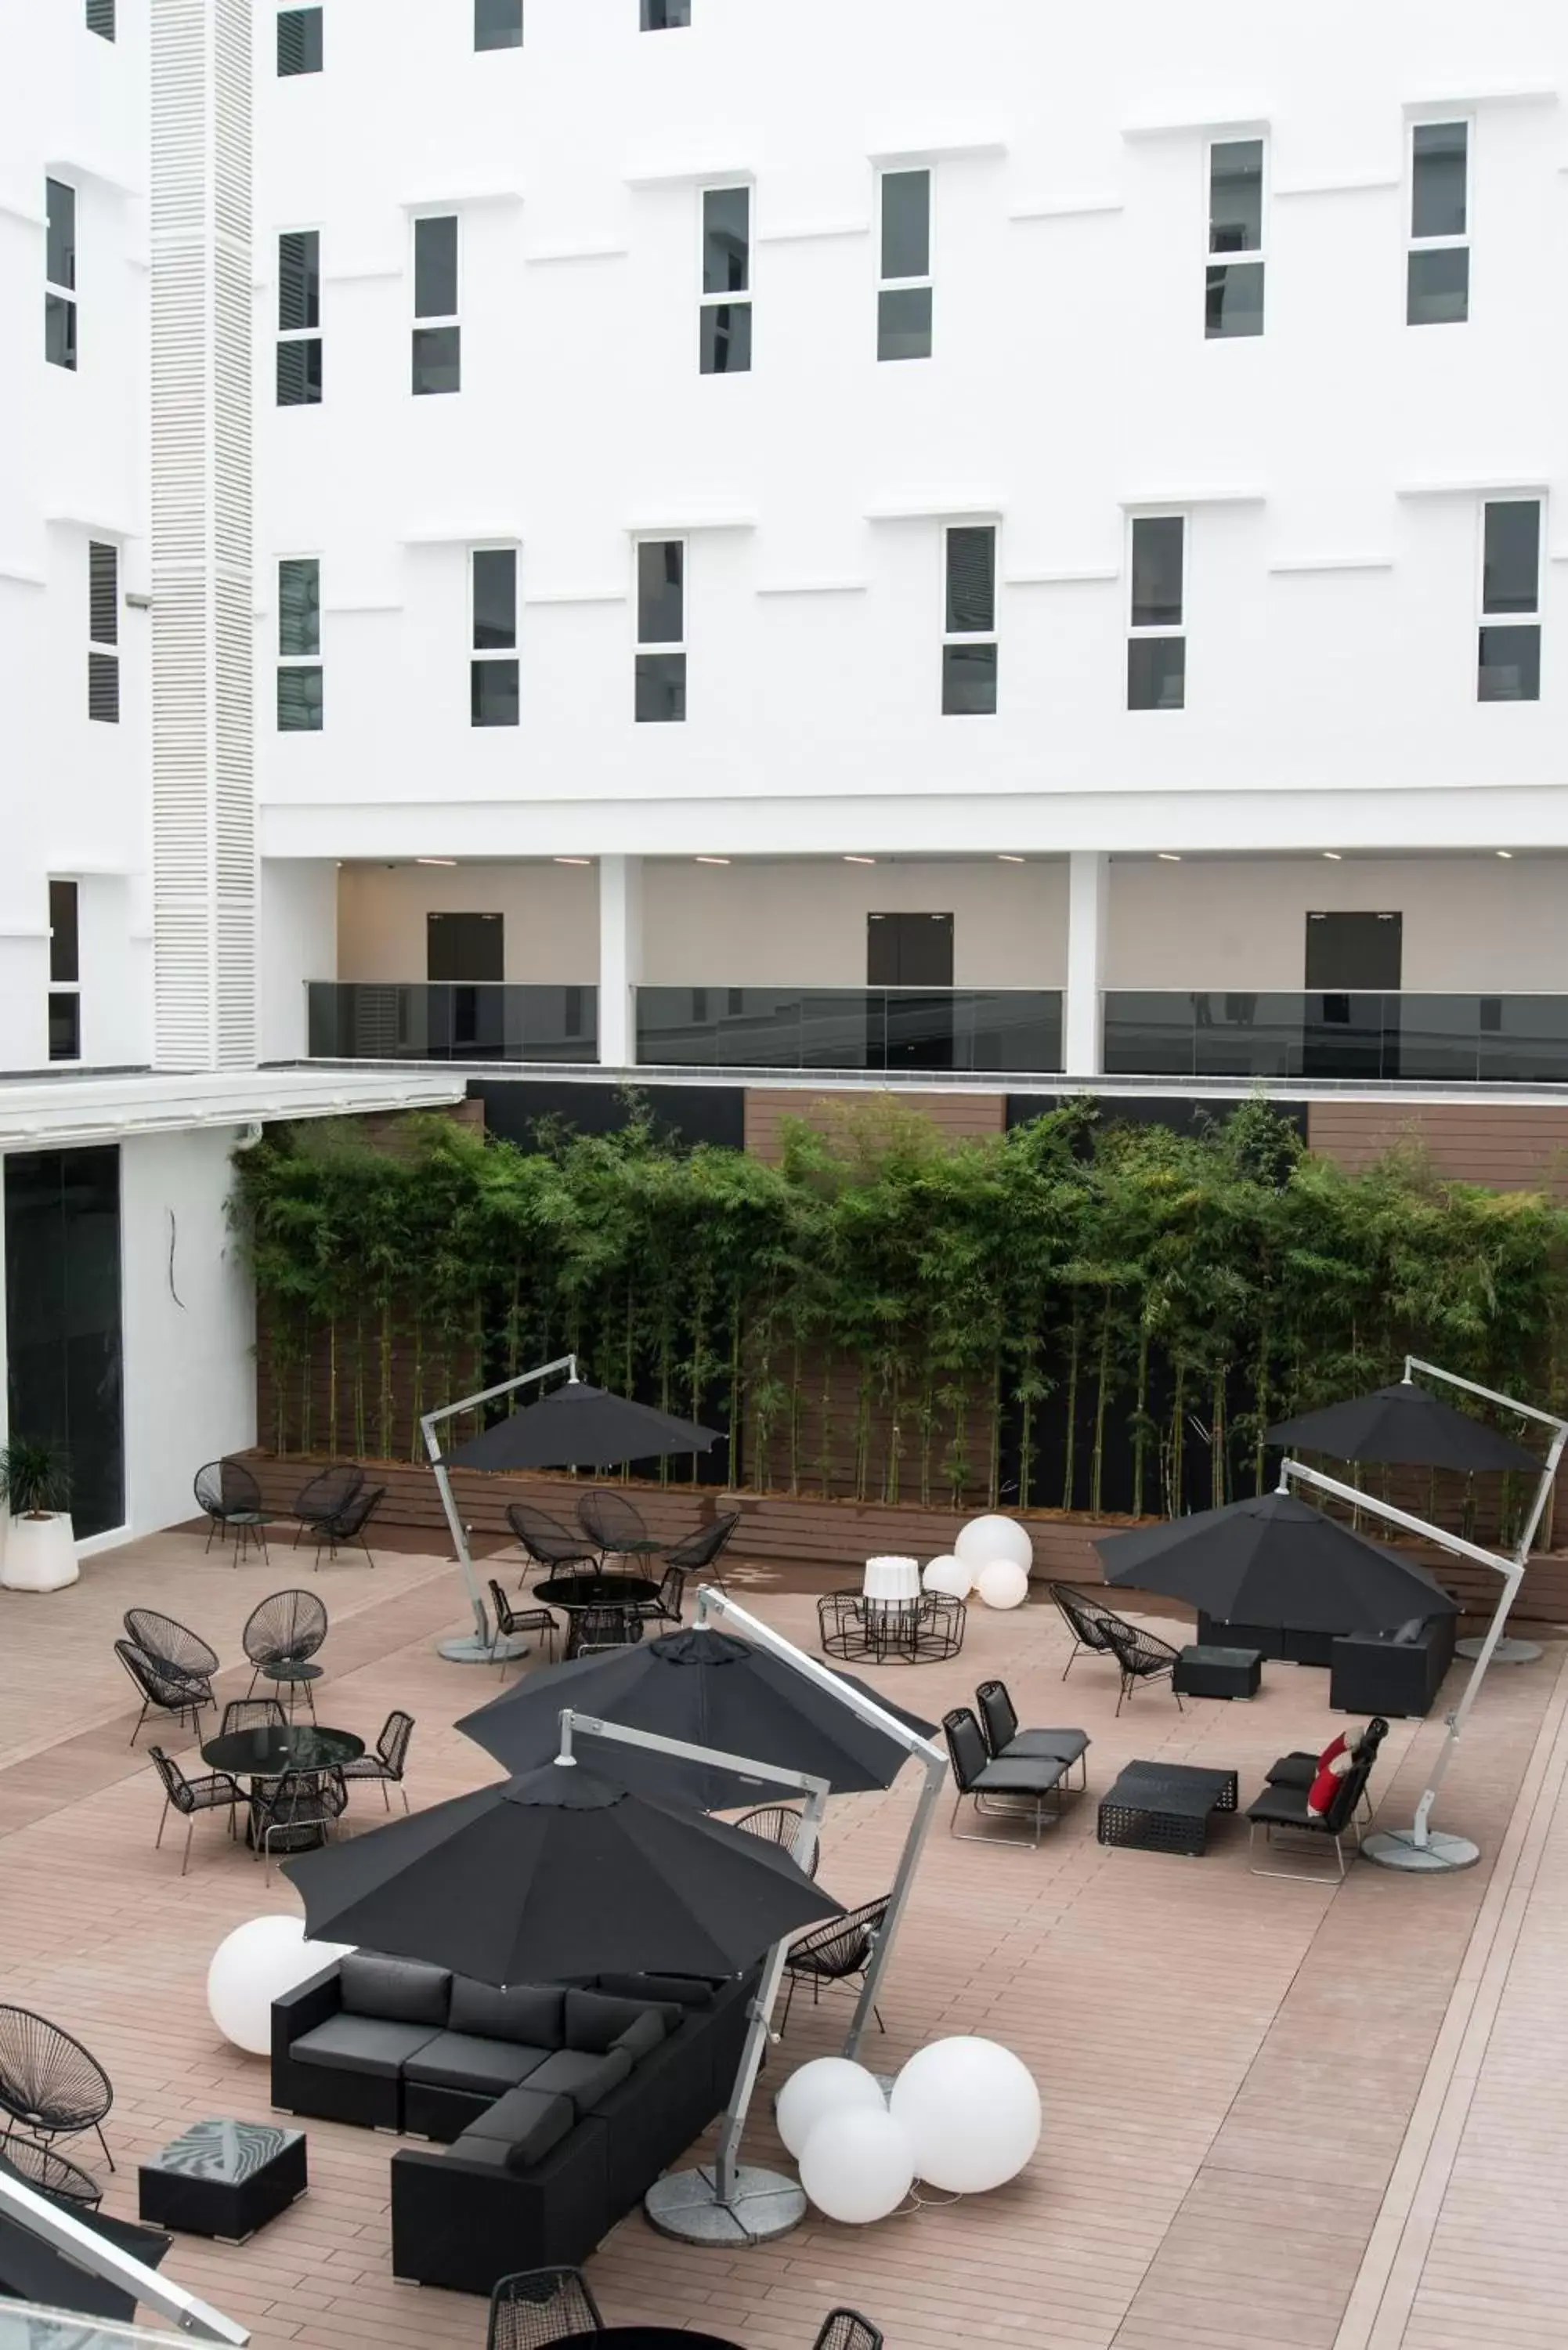 Balcony/Terrace, Patio/Outdoor Area in Tune Hotel KLIA-KLIA2, Airport Transit Hotel